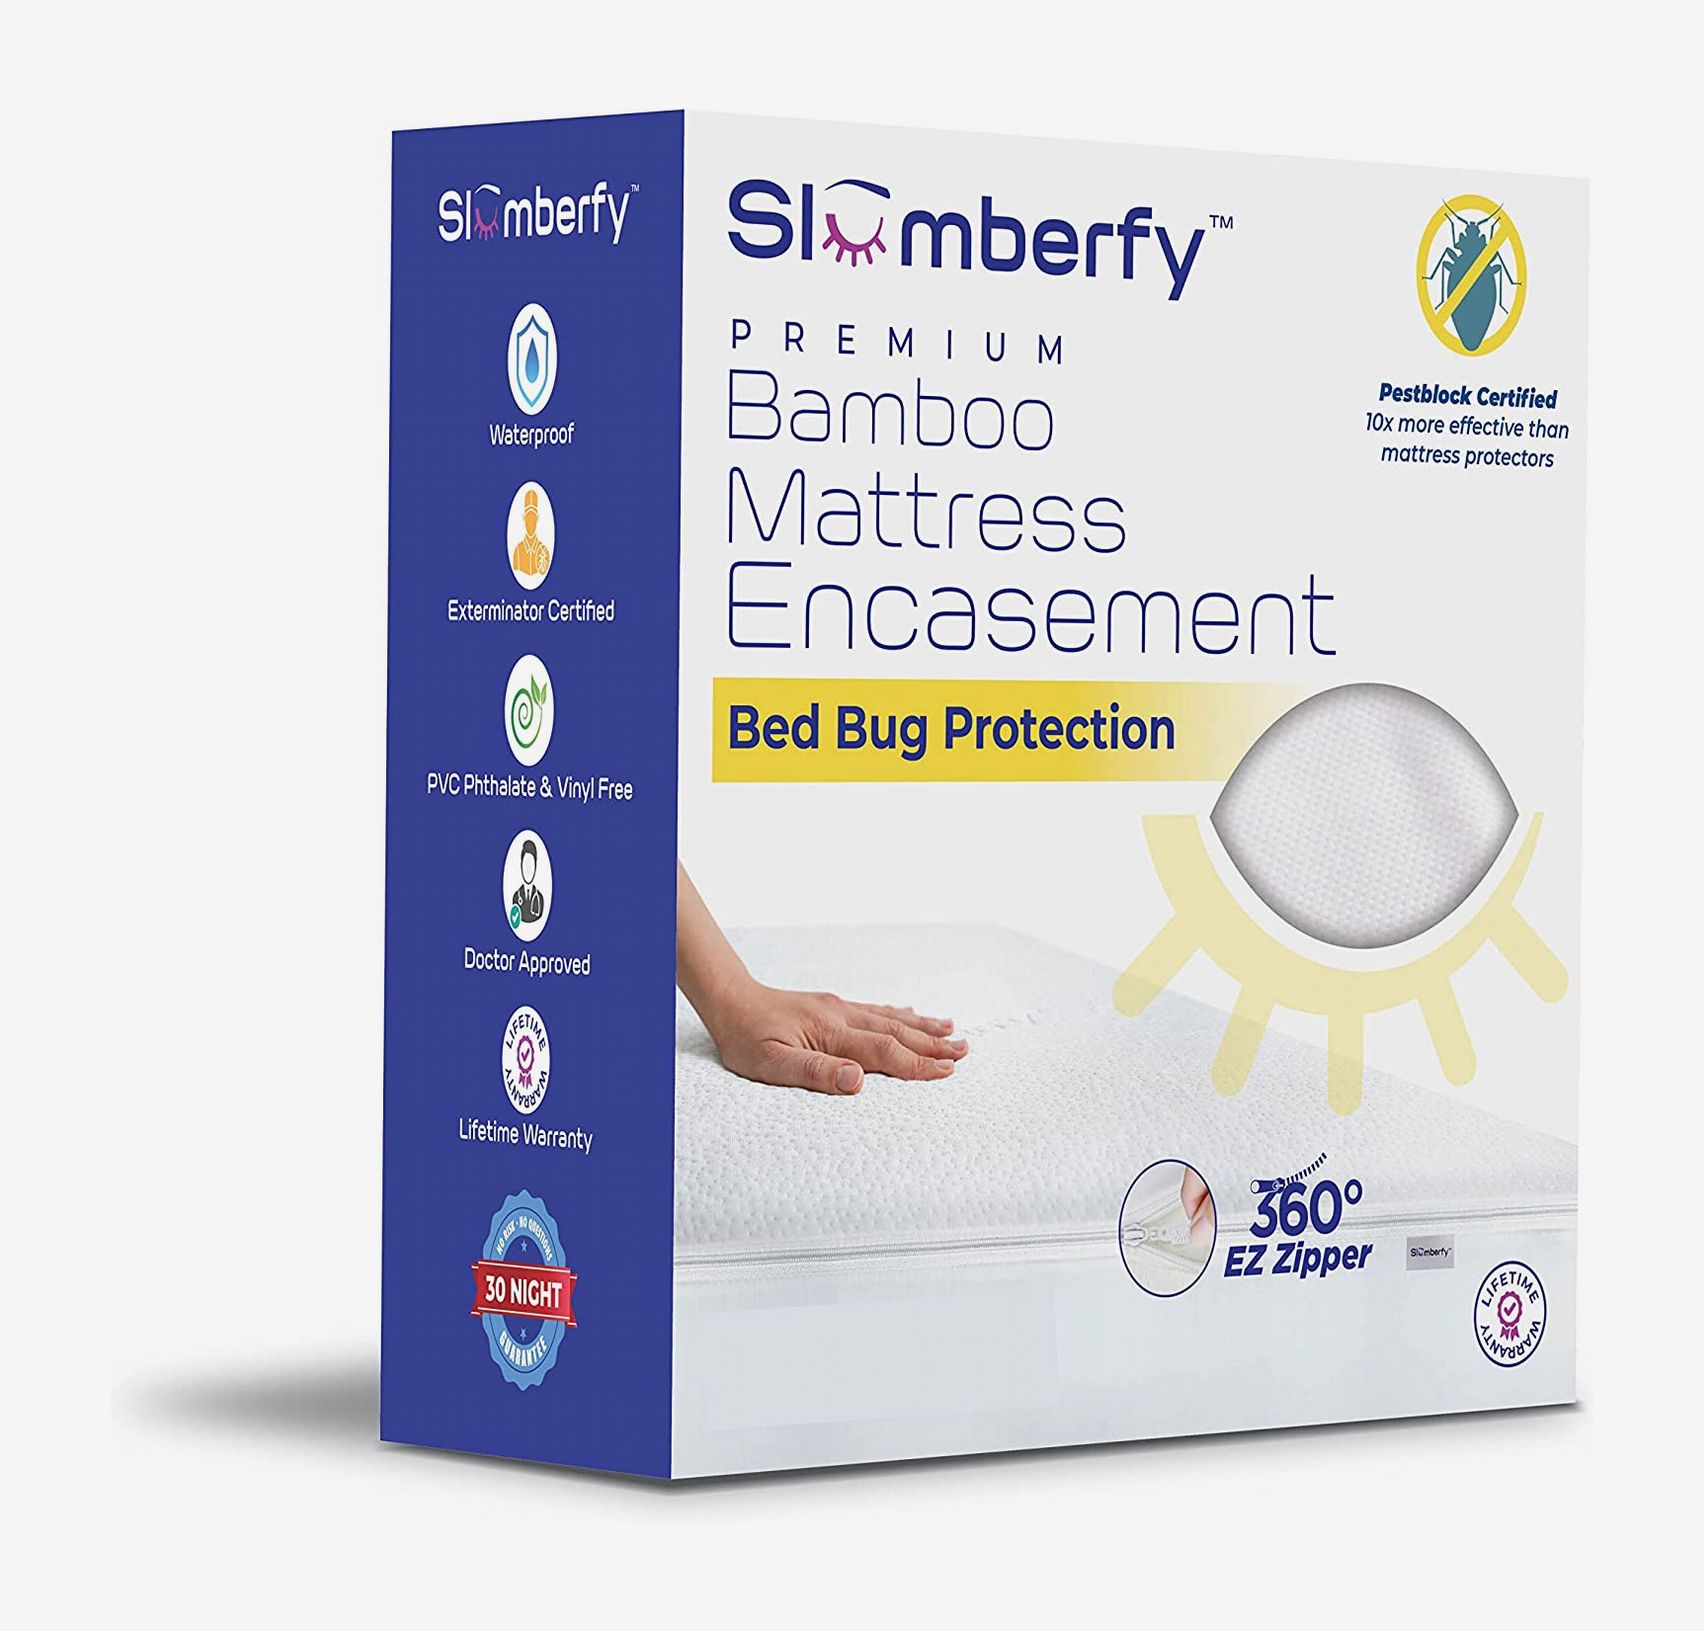 Queen Size Waterproof Cooling Mattress Protector by Slumberfy - Premium